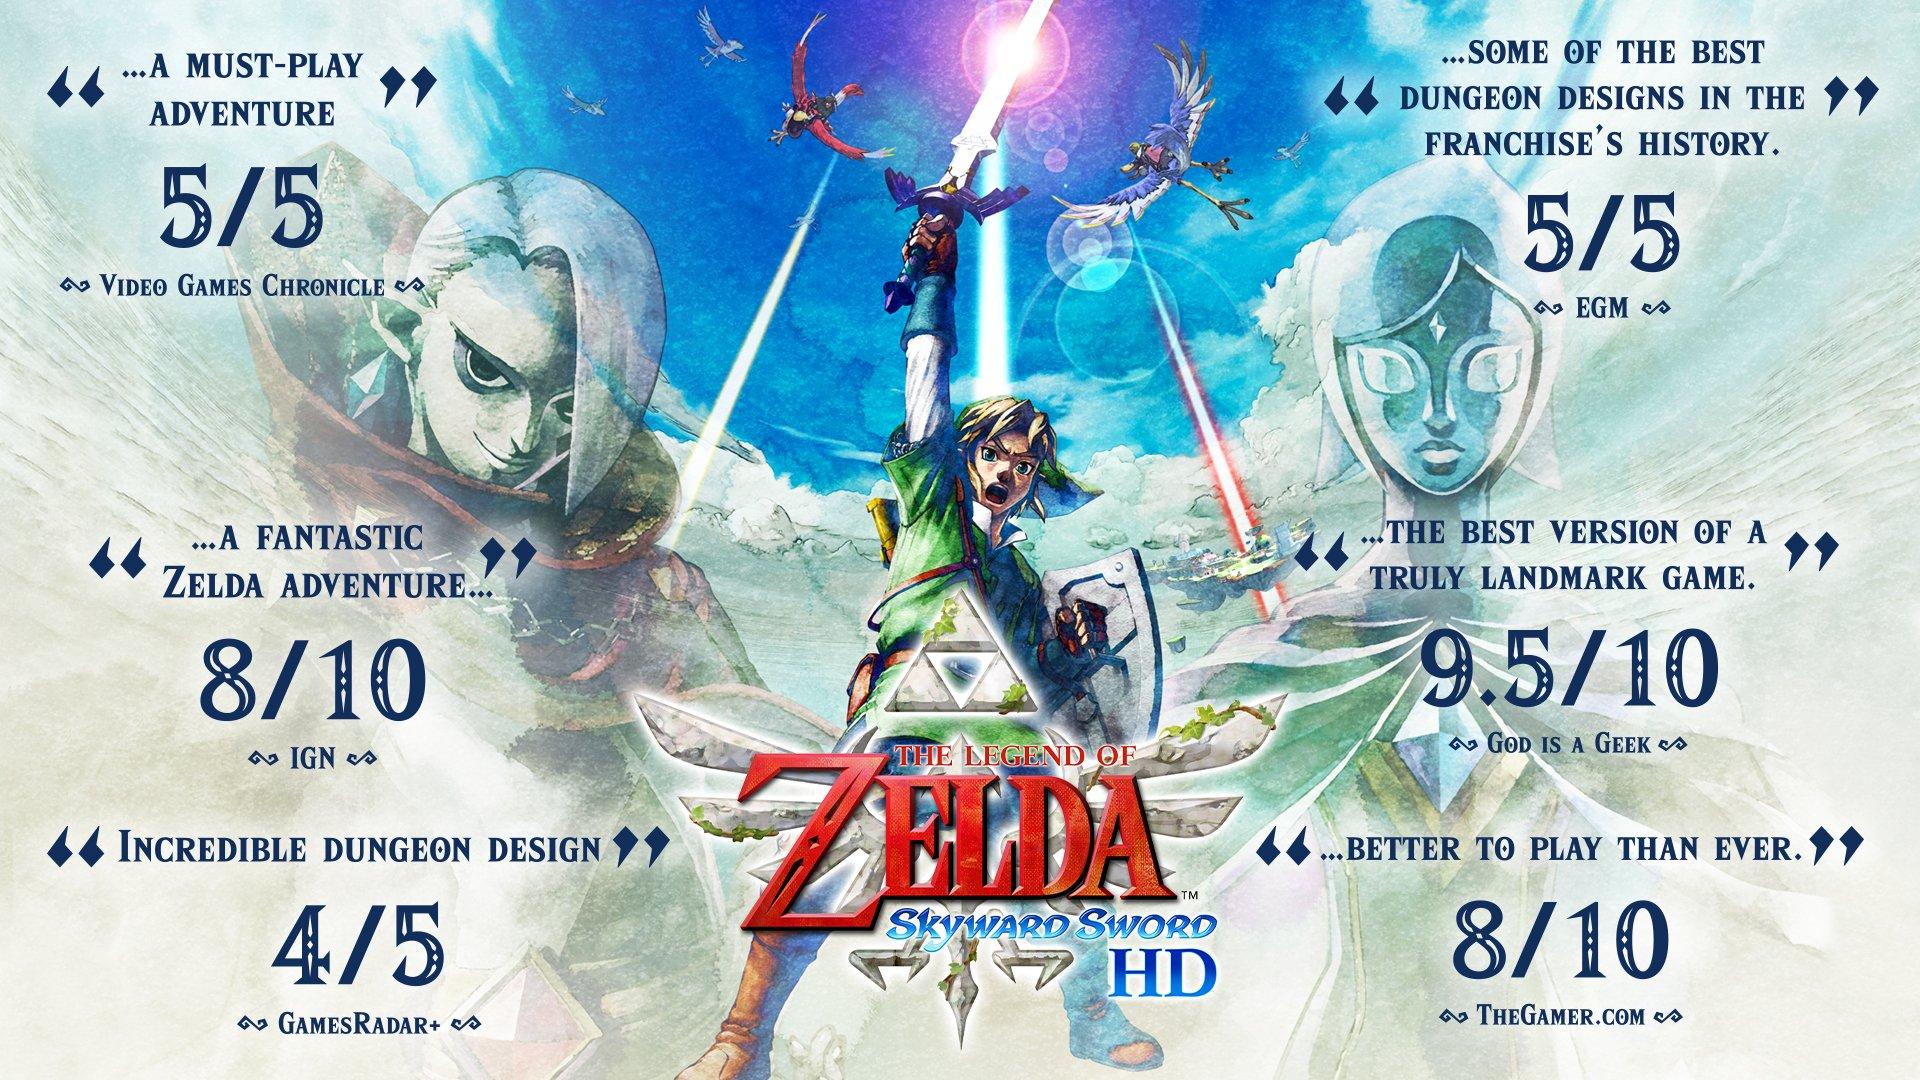 Jogo The Legend Of Zelda: Skyward Sword HD - Nintendo Switch (BRA) - TK  Fortini Games